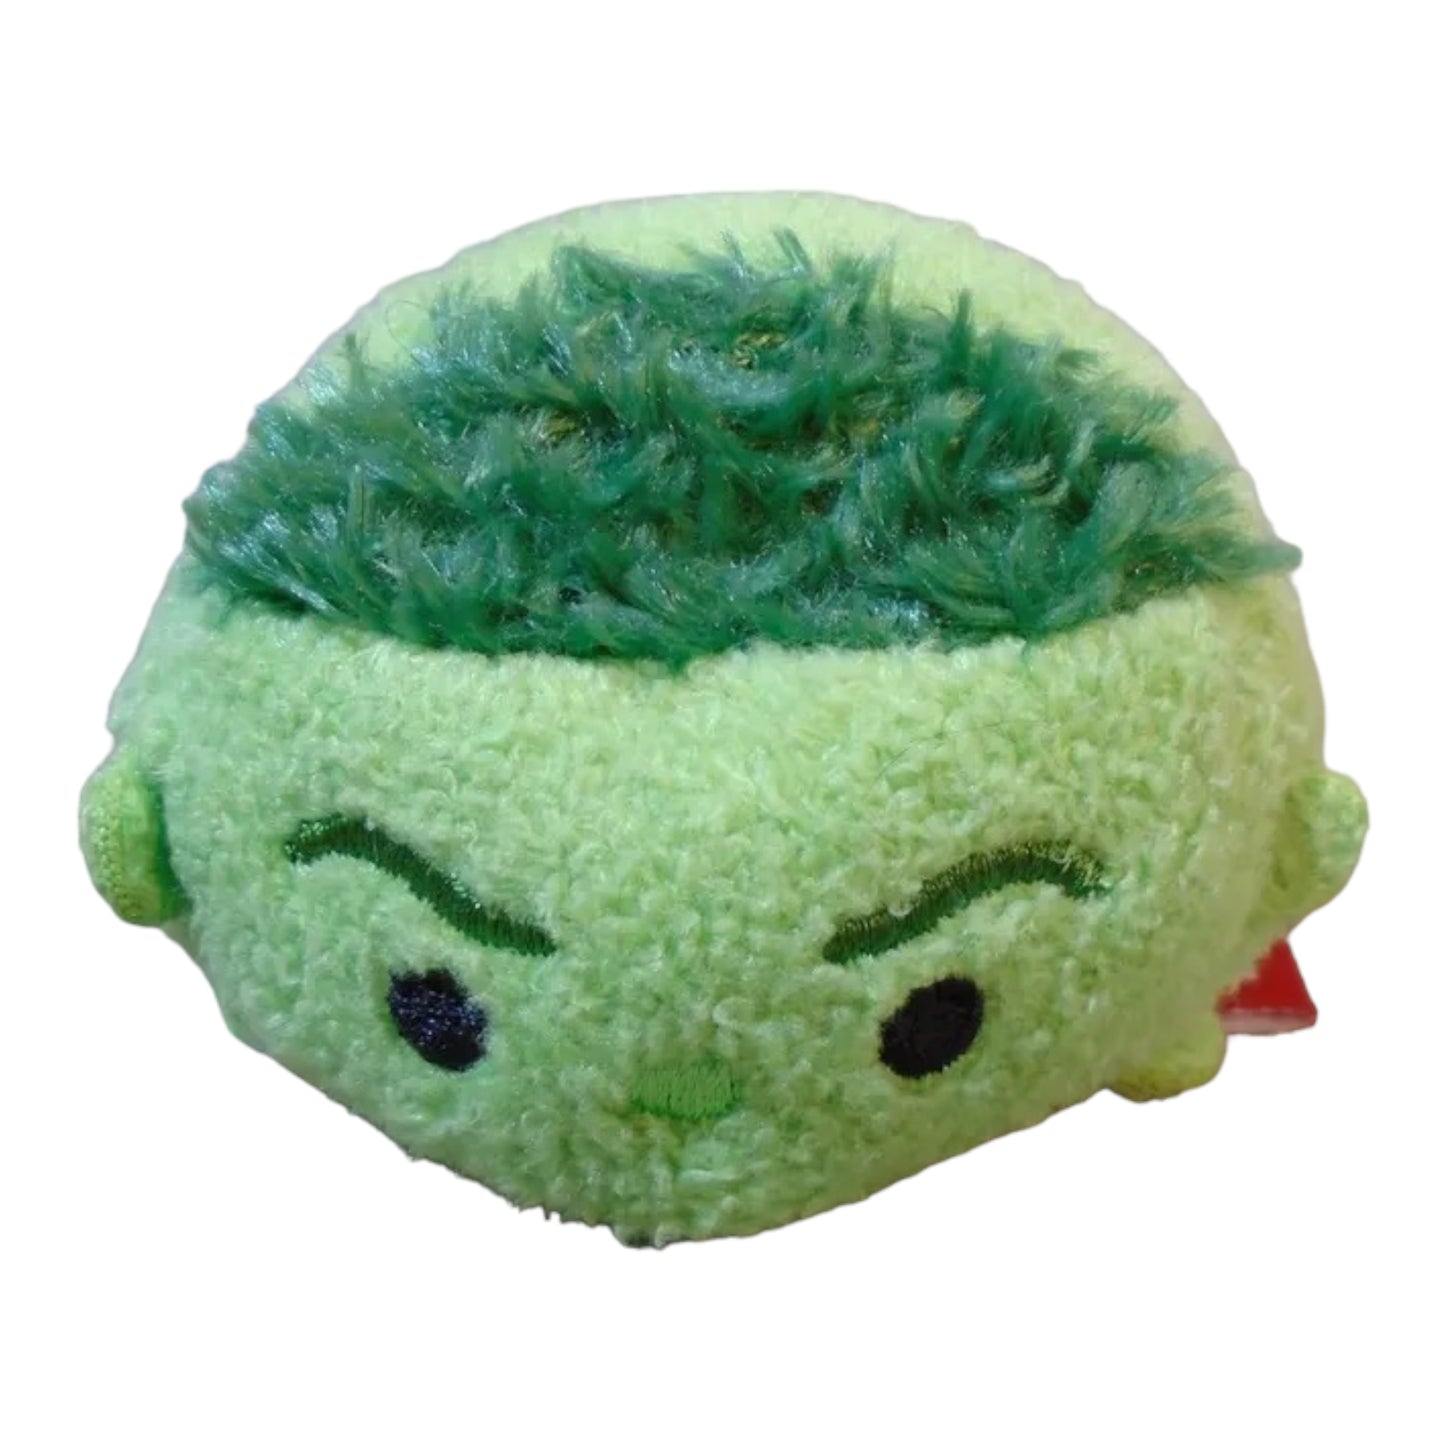 The Incredible Hulk Tsum Tsum Mini Plush